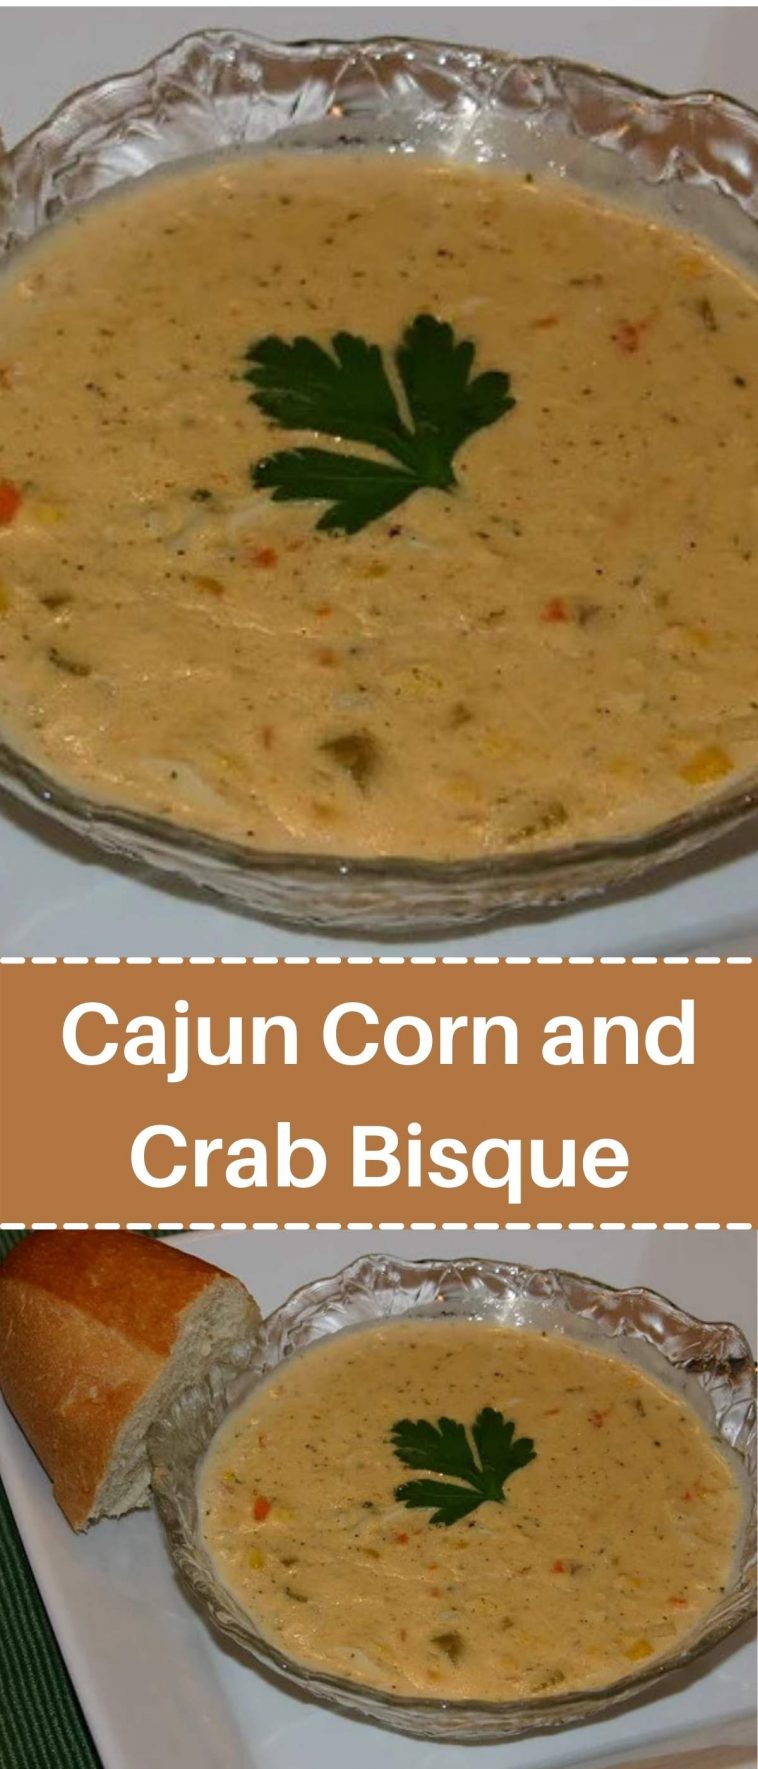 Cajun Corn and Crab Bisque